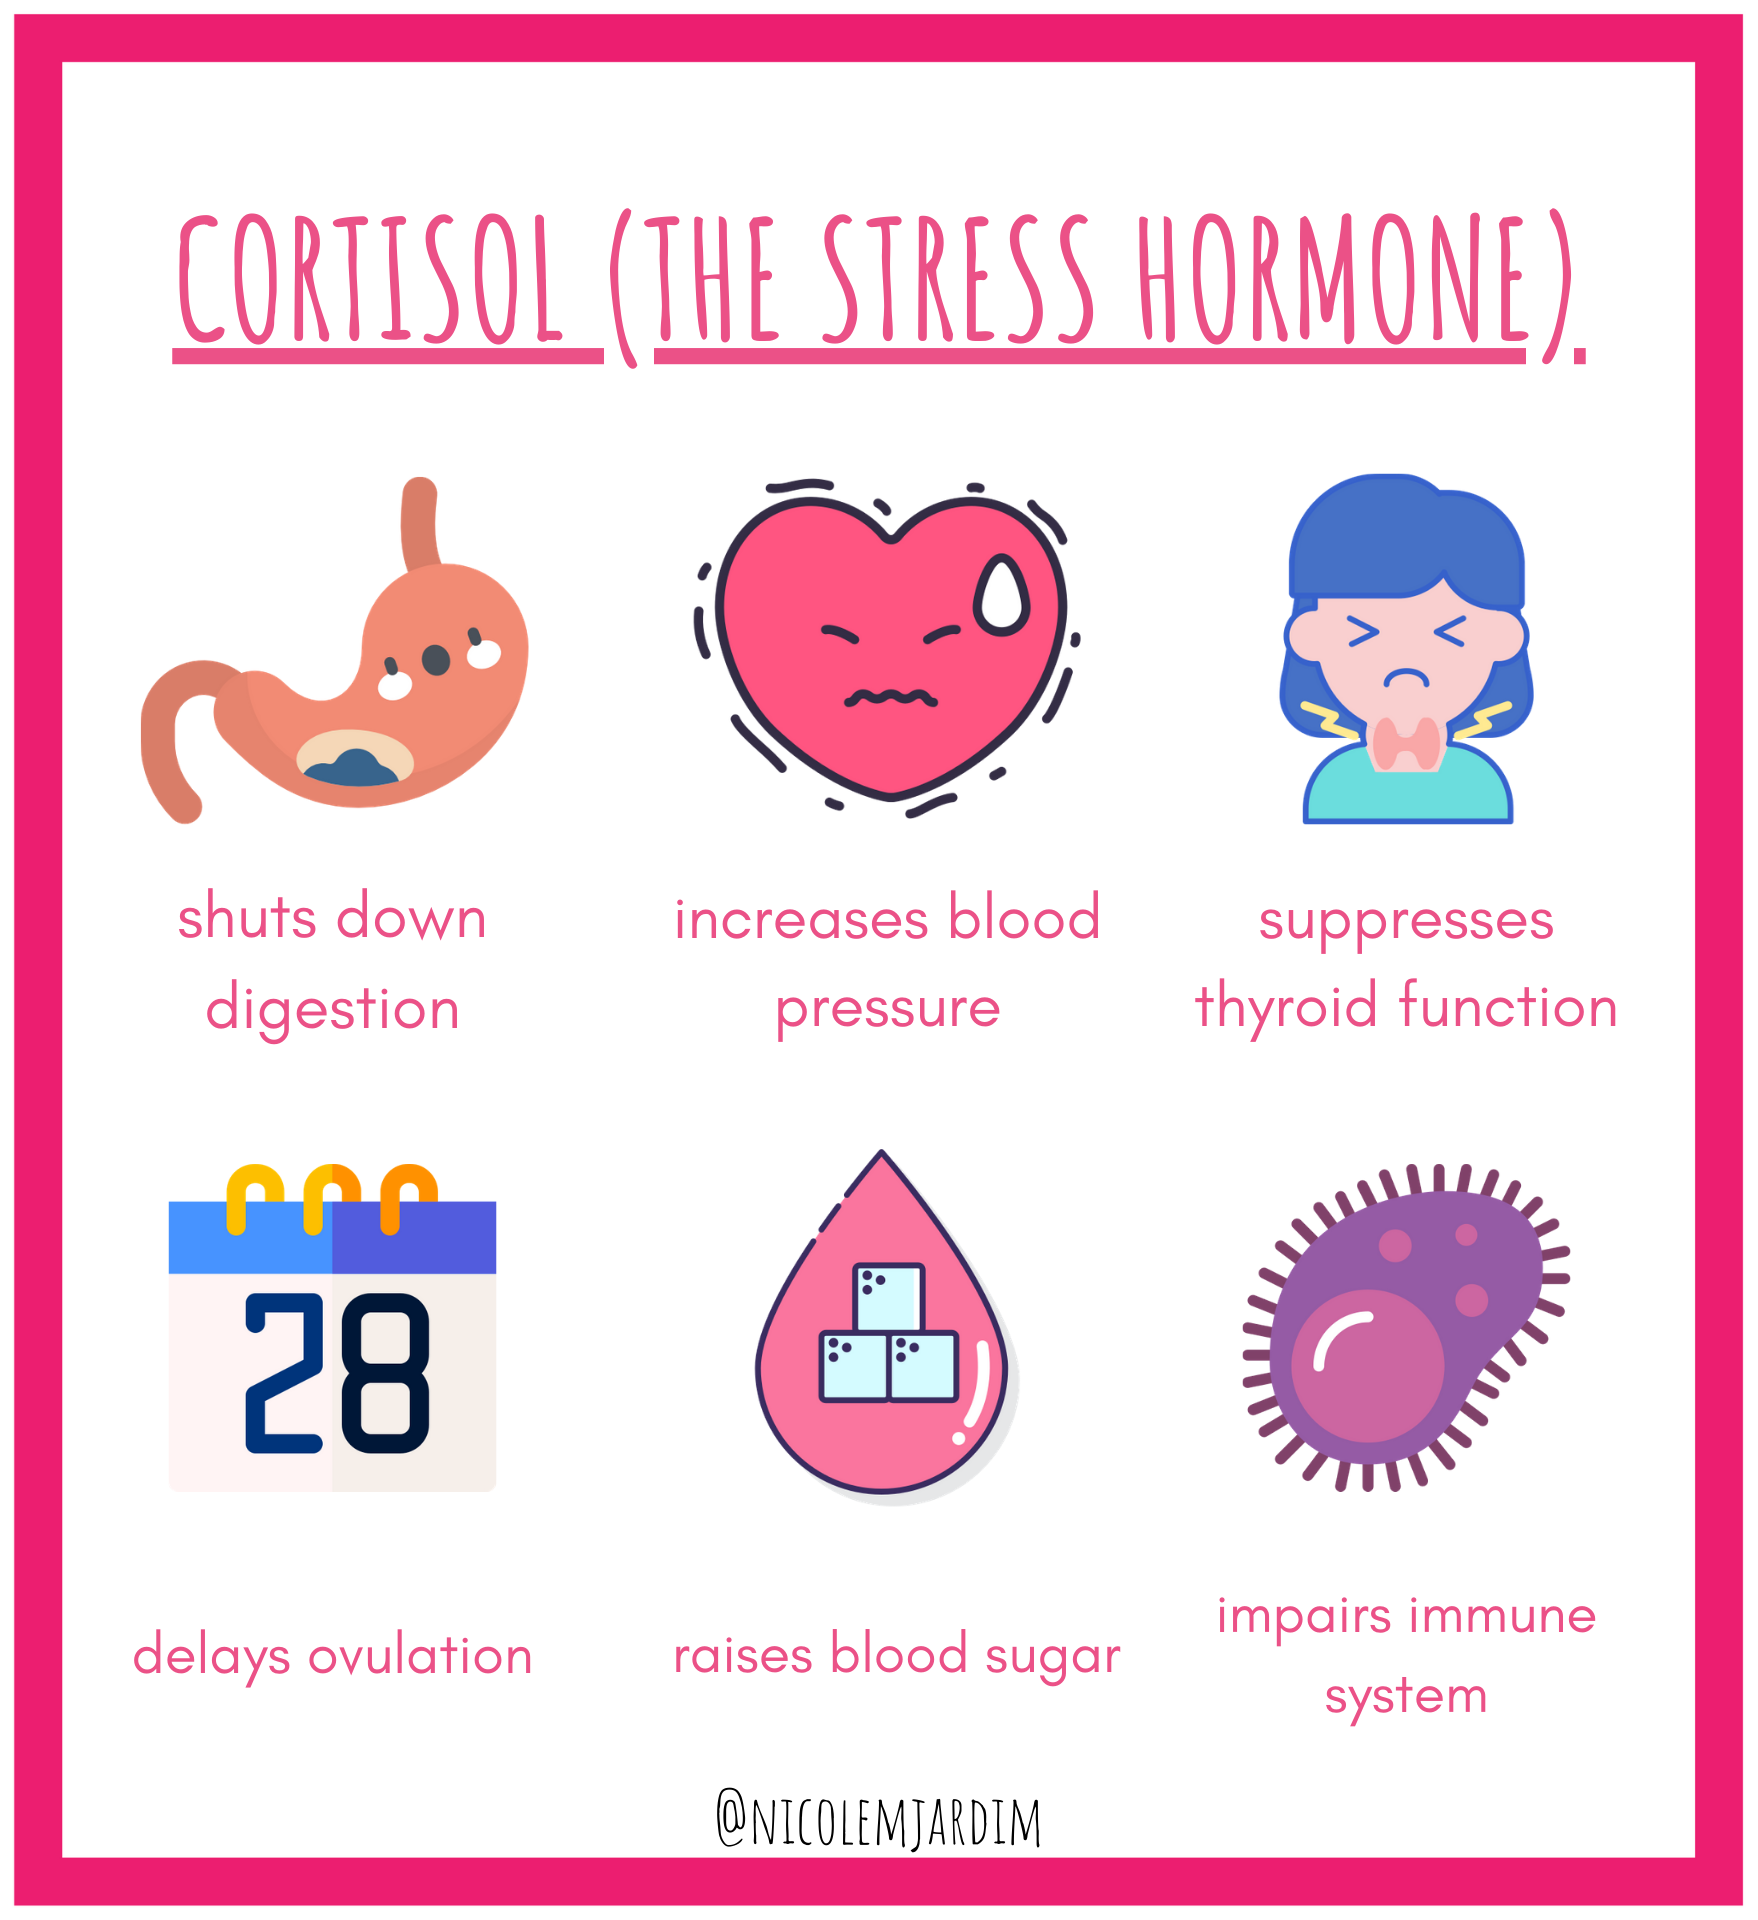 Cortisol the stress hormone